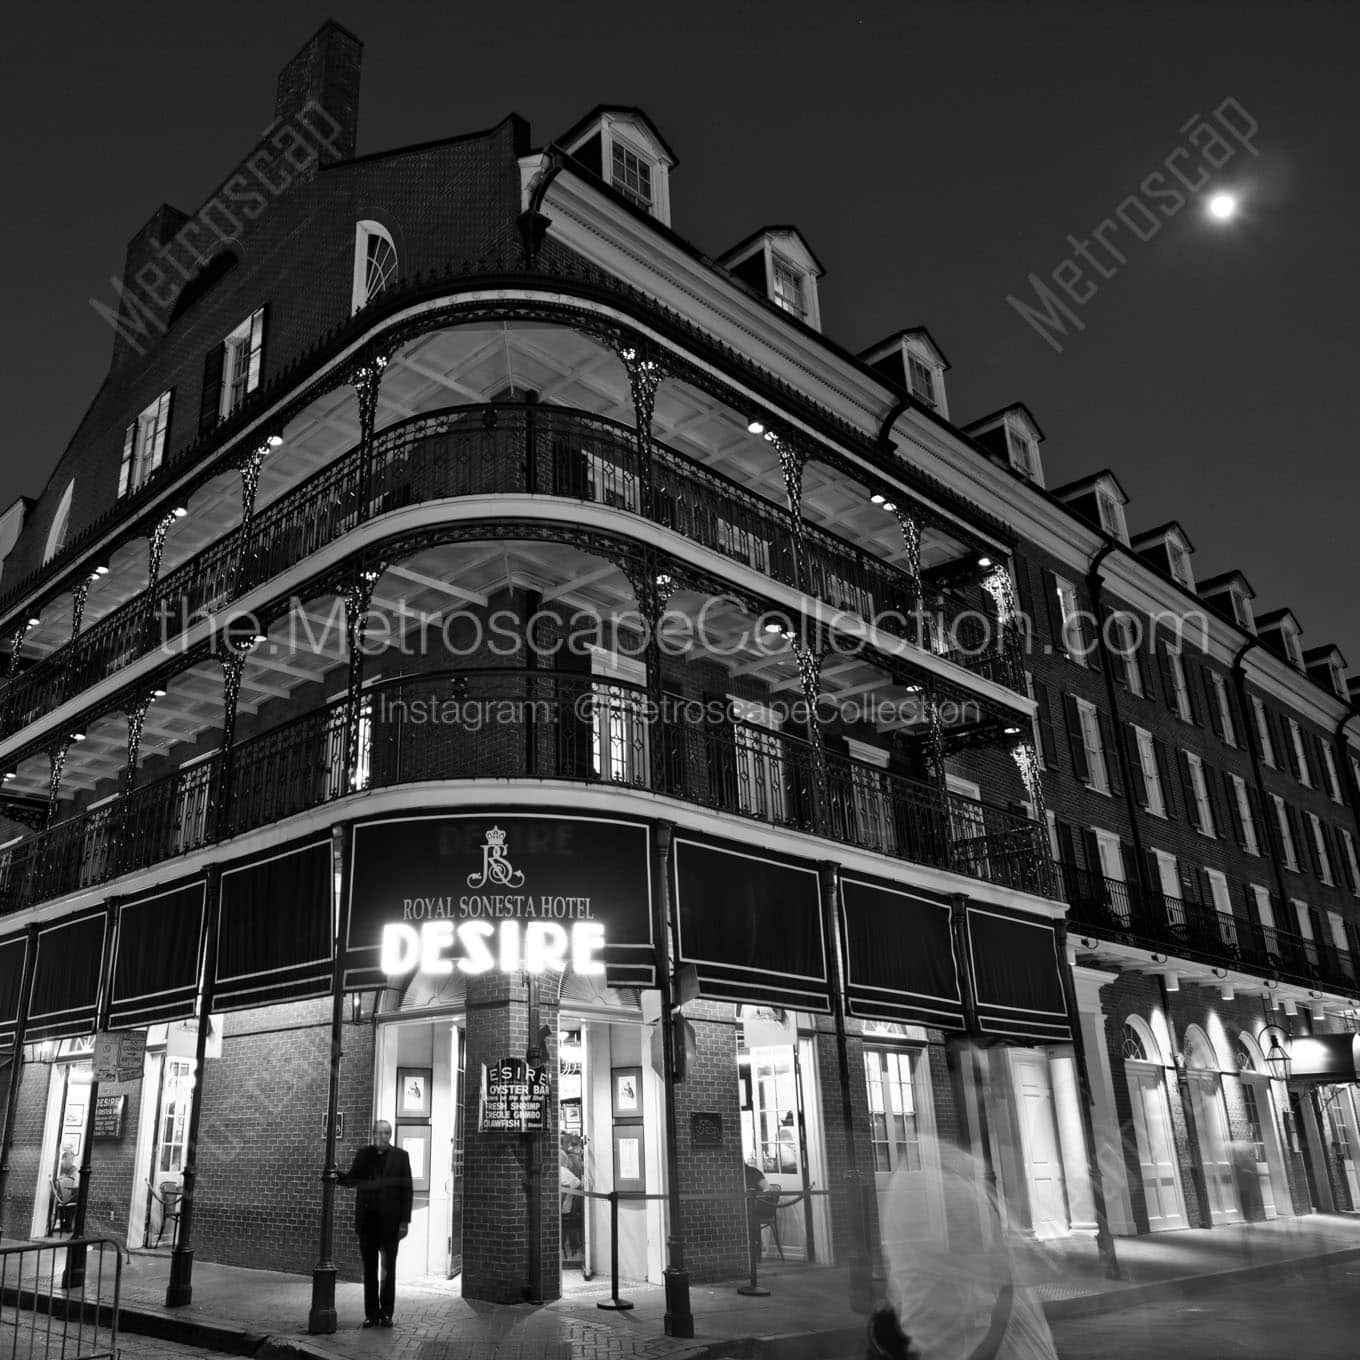 royal sonesta desire hotel at night Black & White Office Art